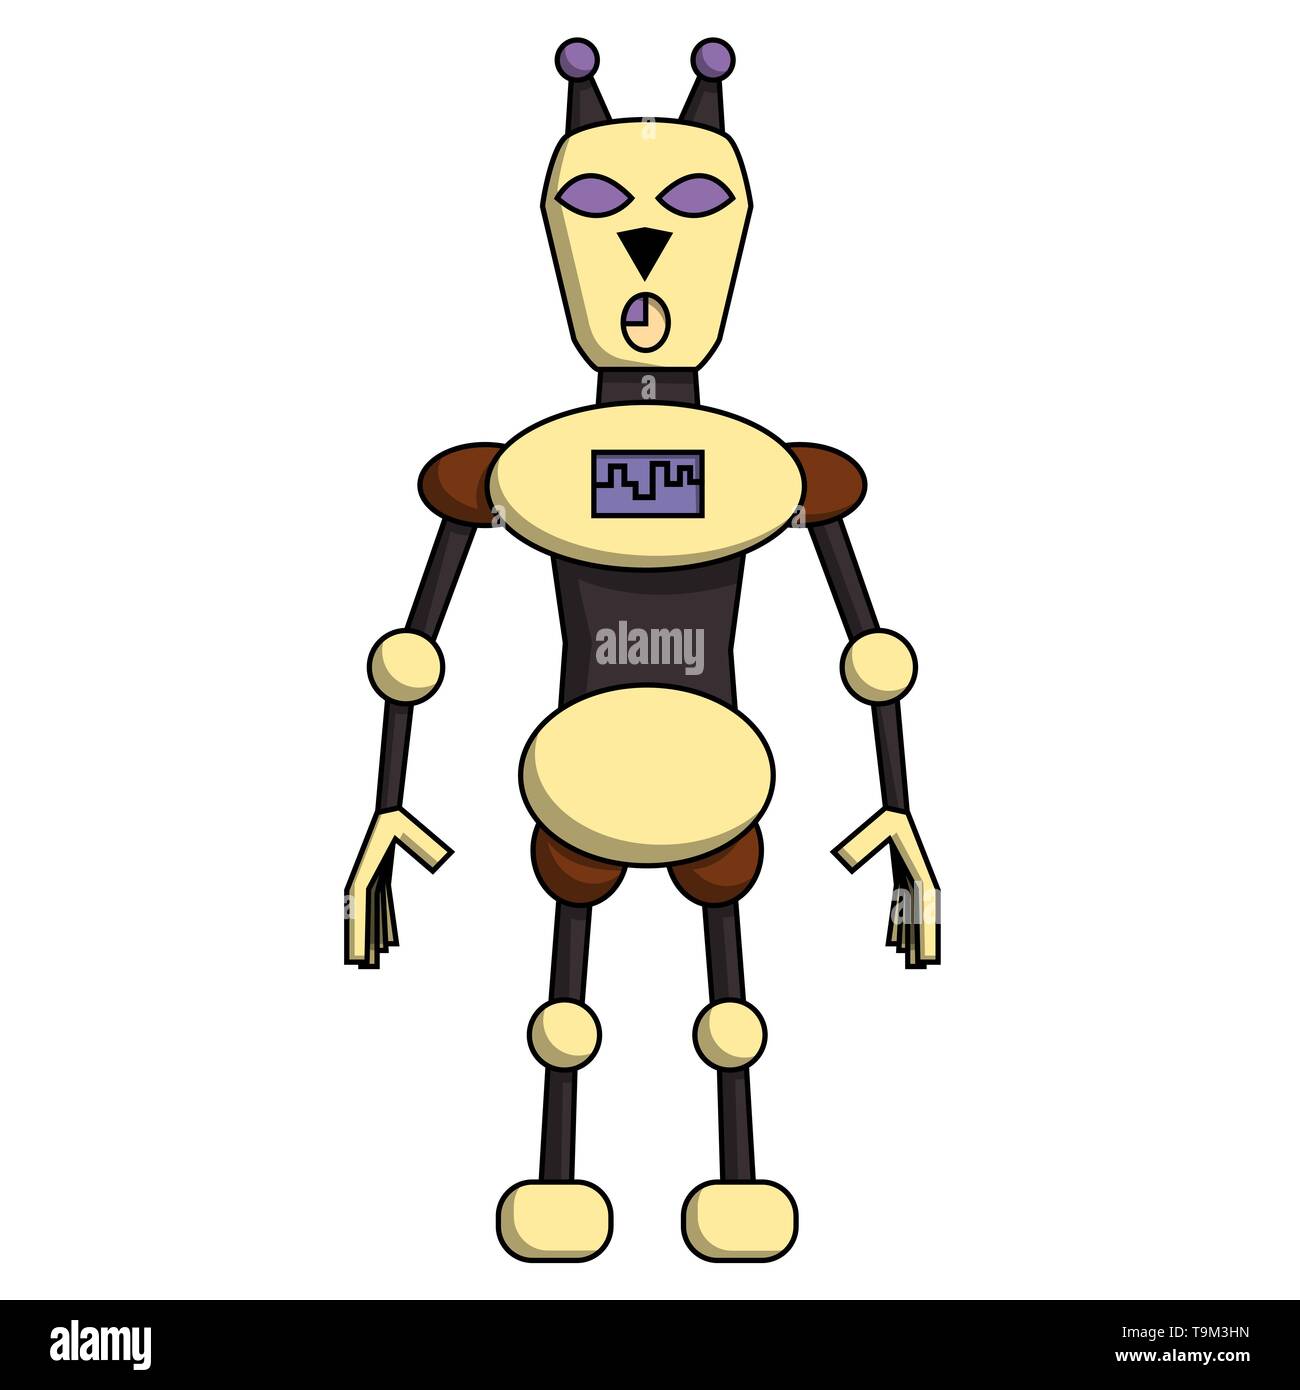 10,407 Robot Boy Cartoon Images, Stock Photos, 3D objects